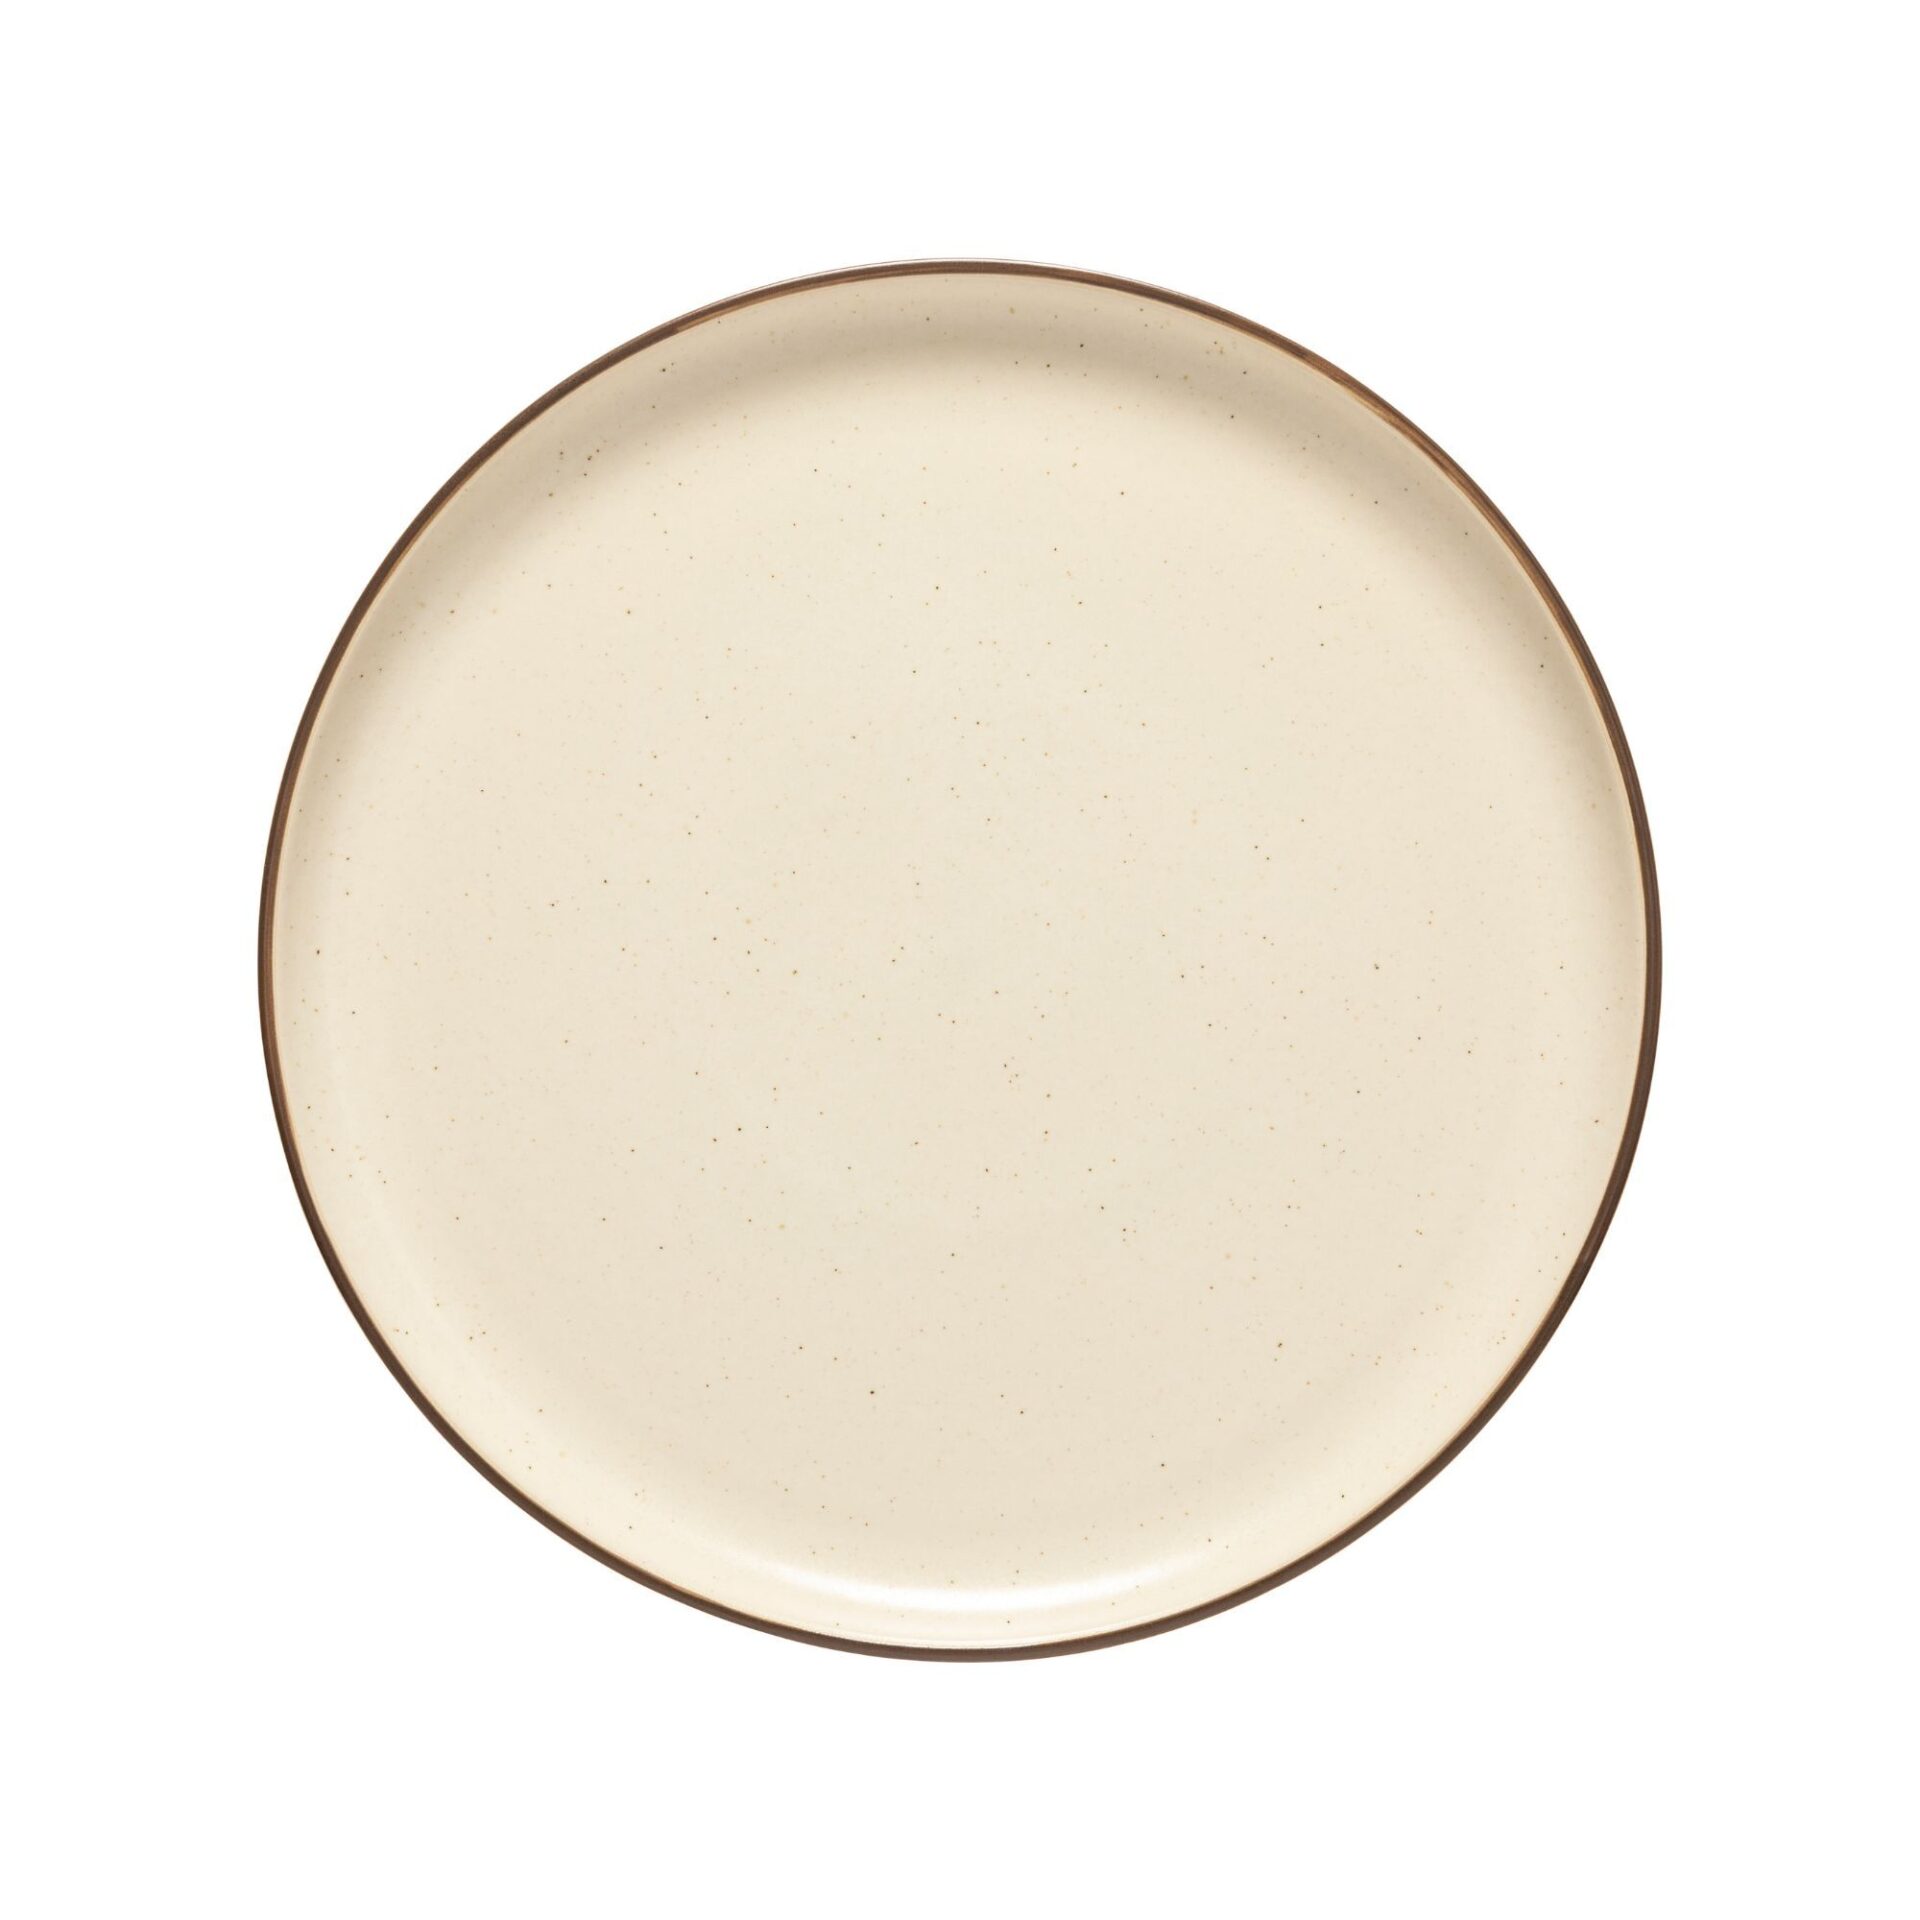 Round plate. Esma Dereboy посуда купить. Novotech grape 370022.